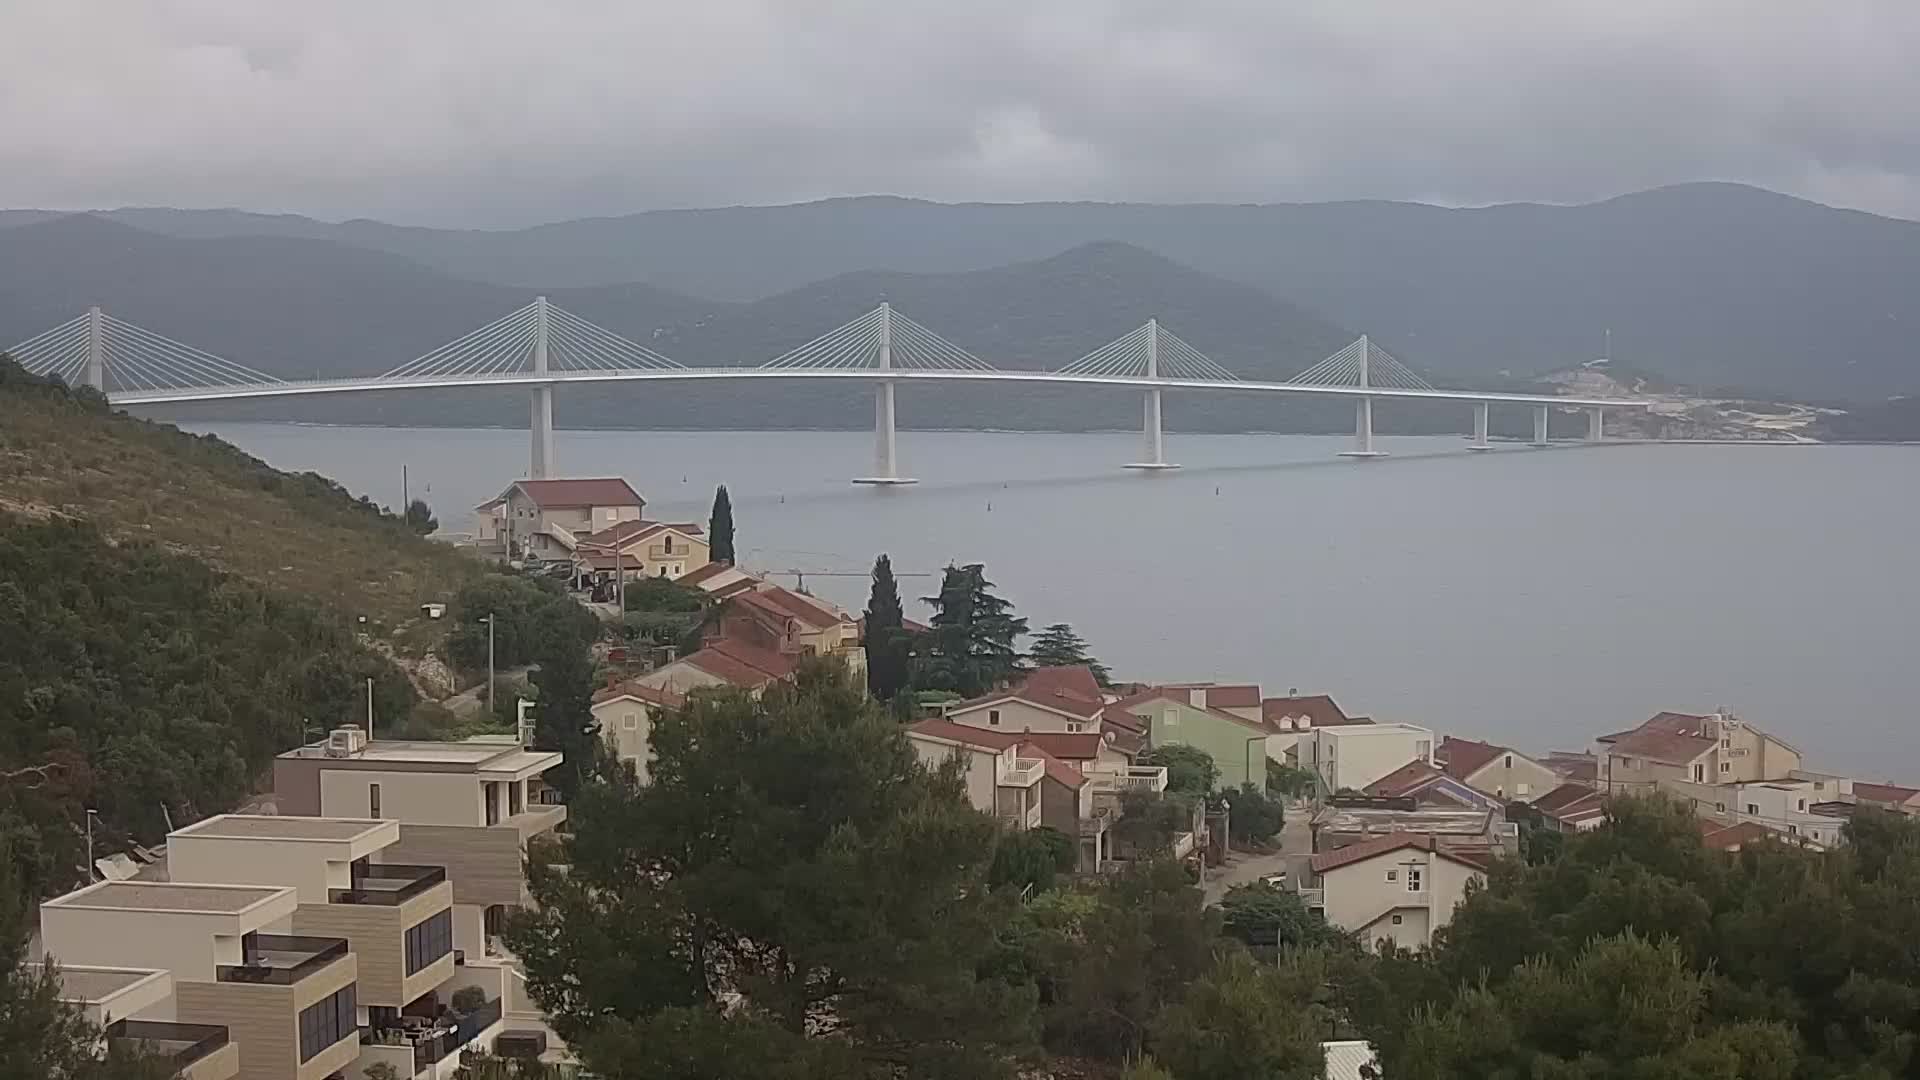 Camera en vivo Ponte de Pelješac